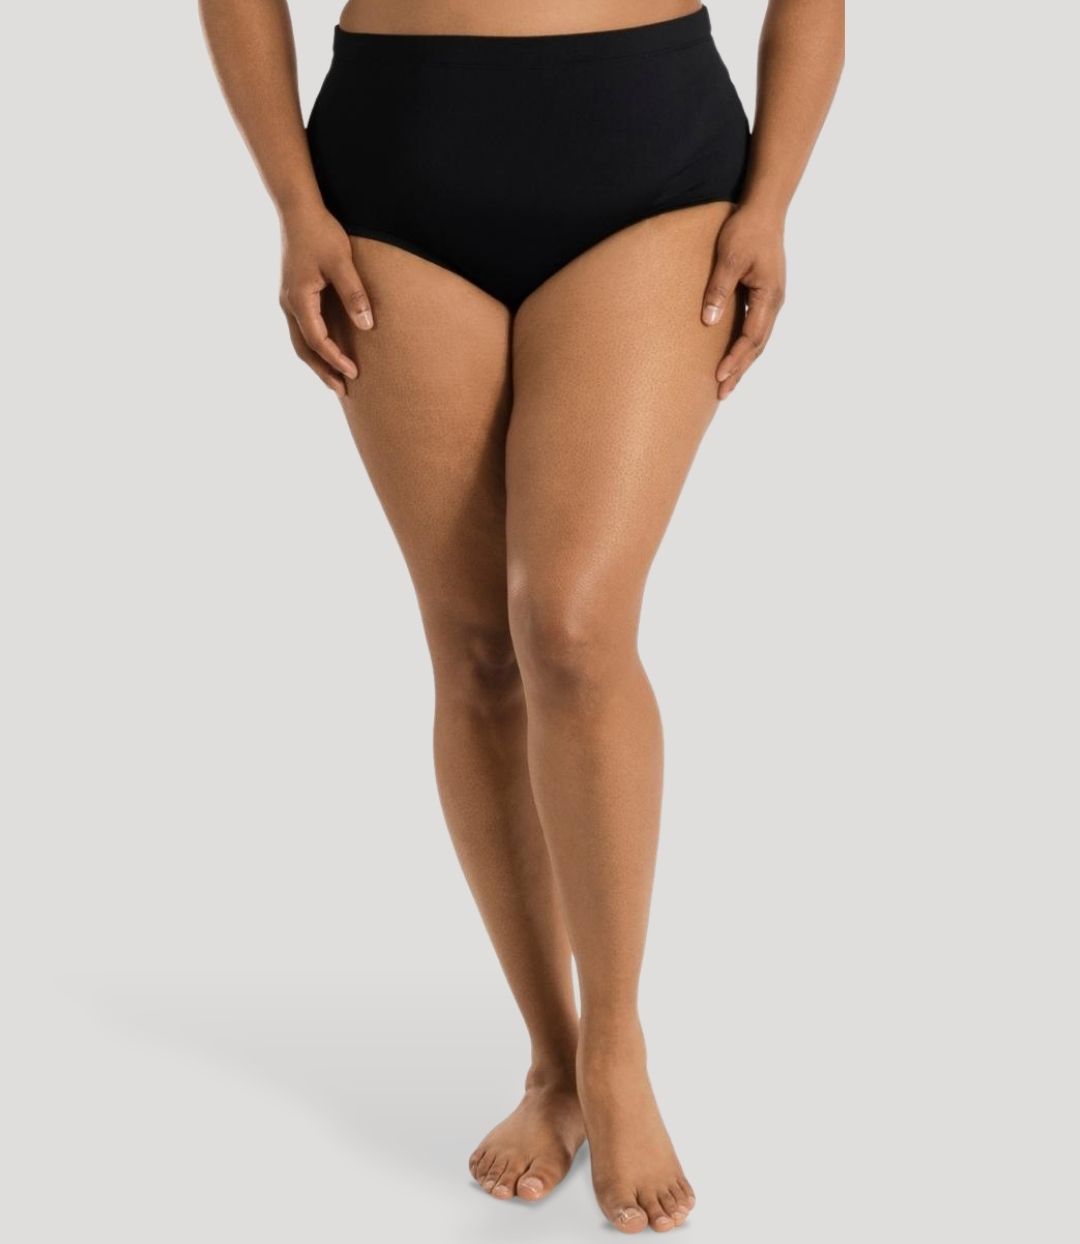 Model, facing front, wearing JunoActive's Aquasport swim brief in color black.